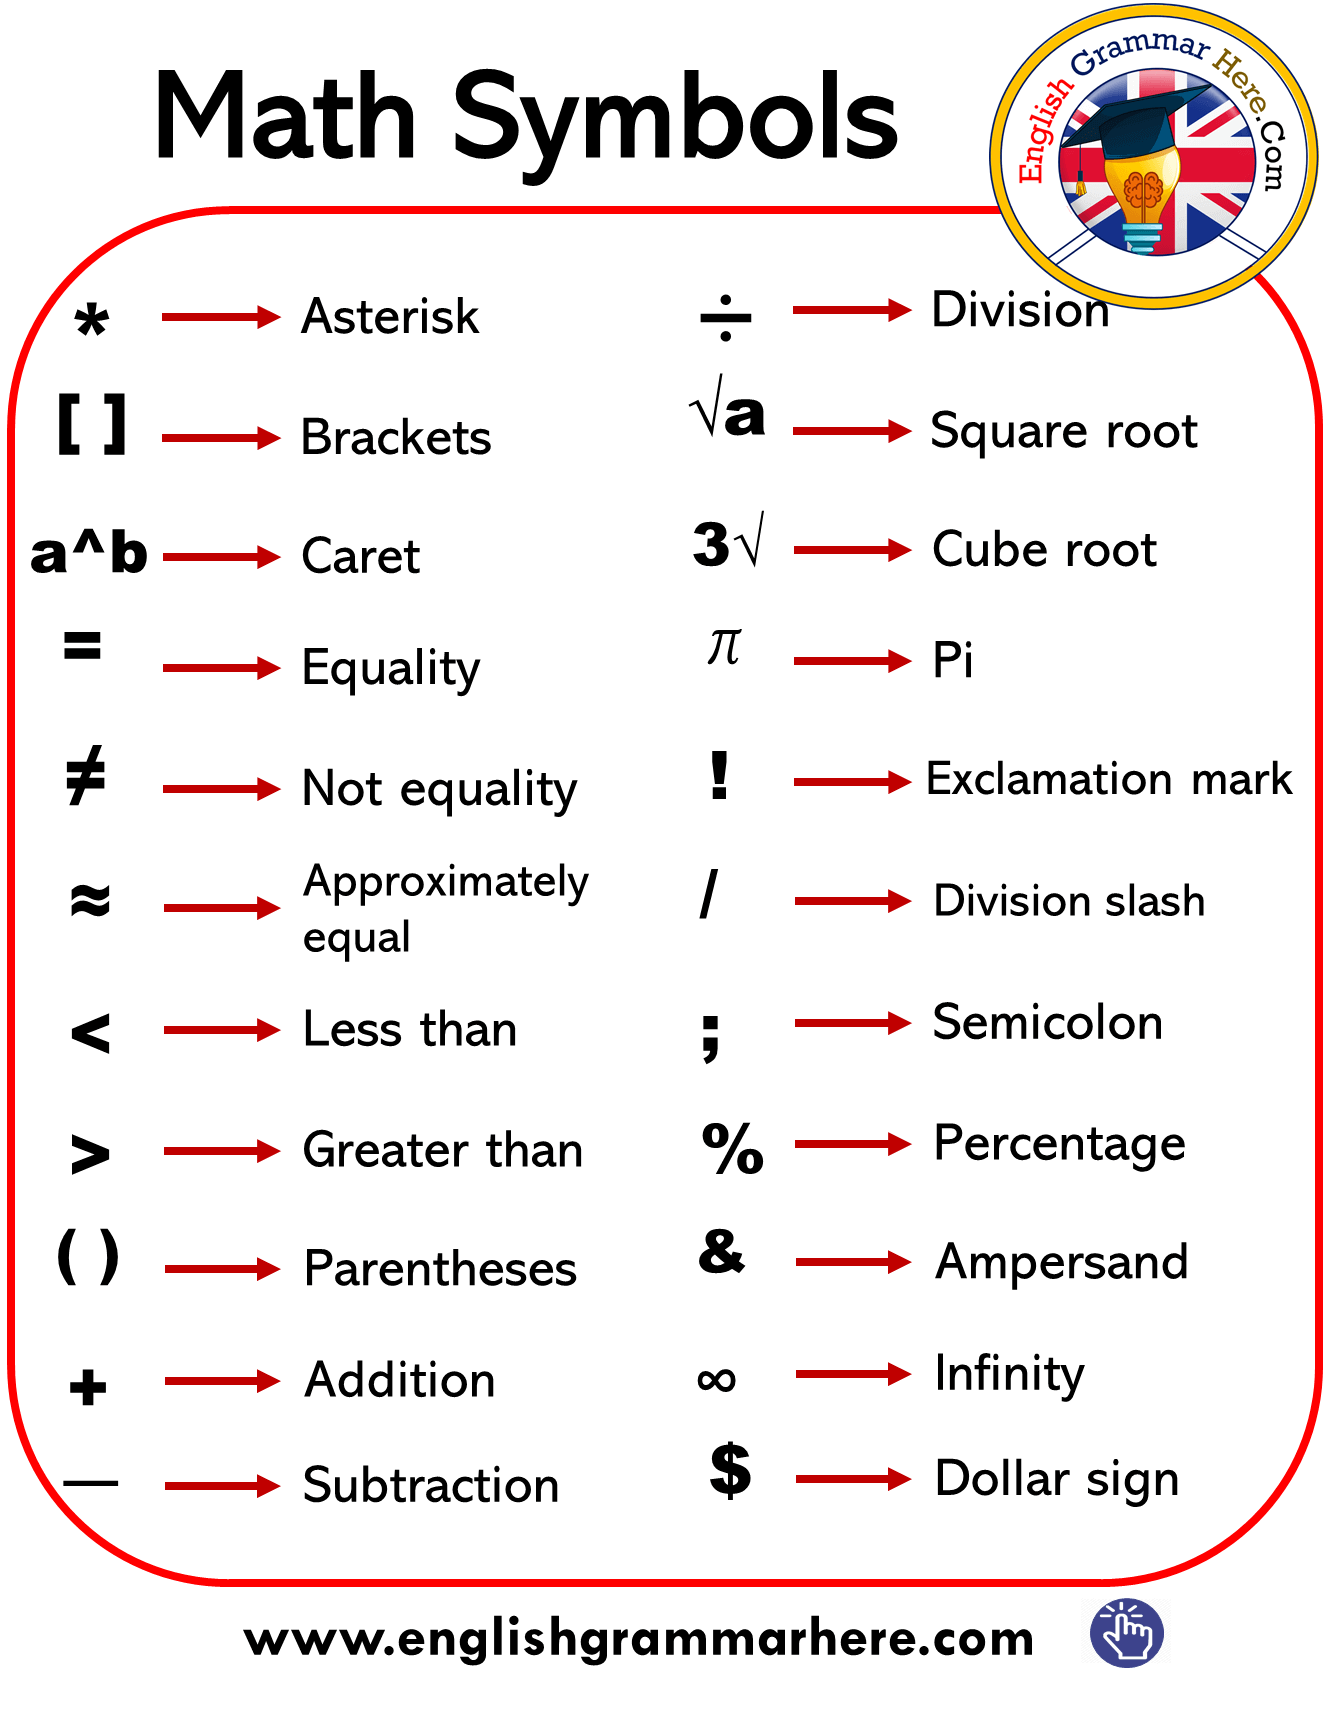 Math Symbols & Signs List in English